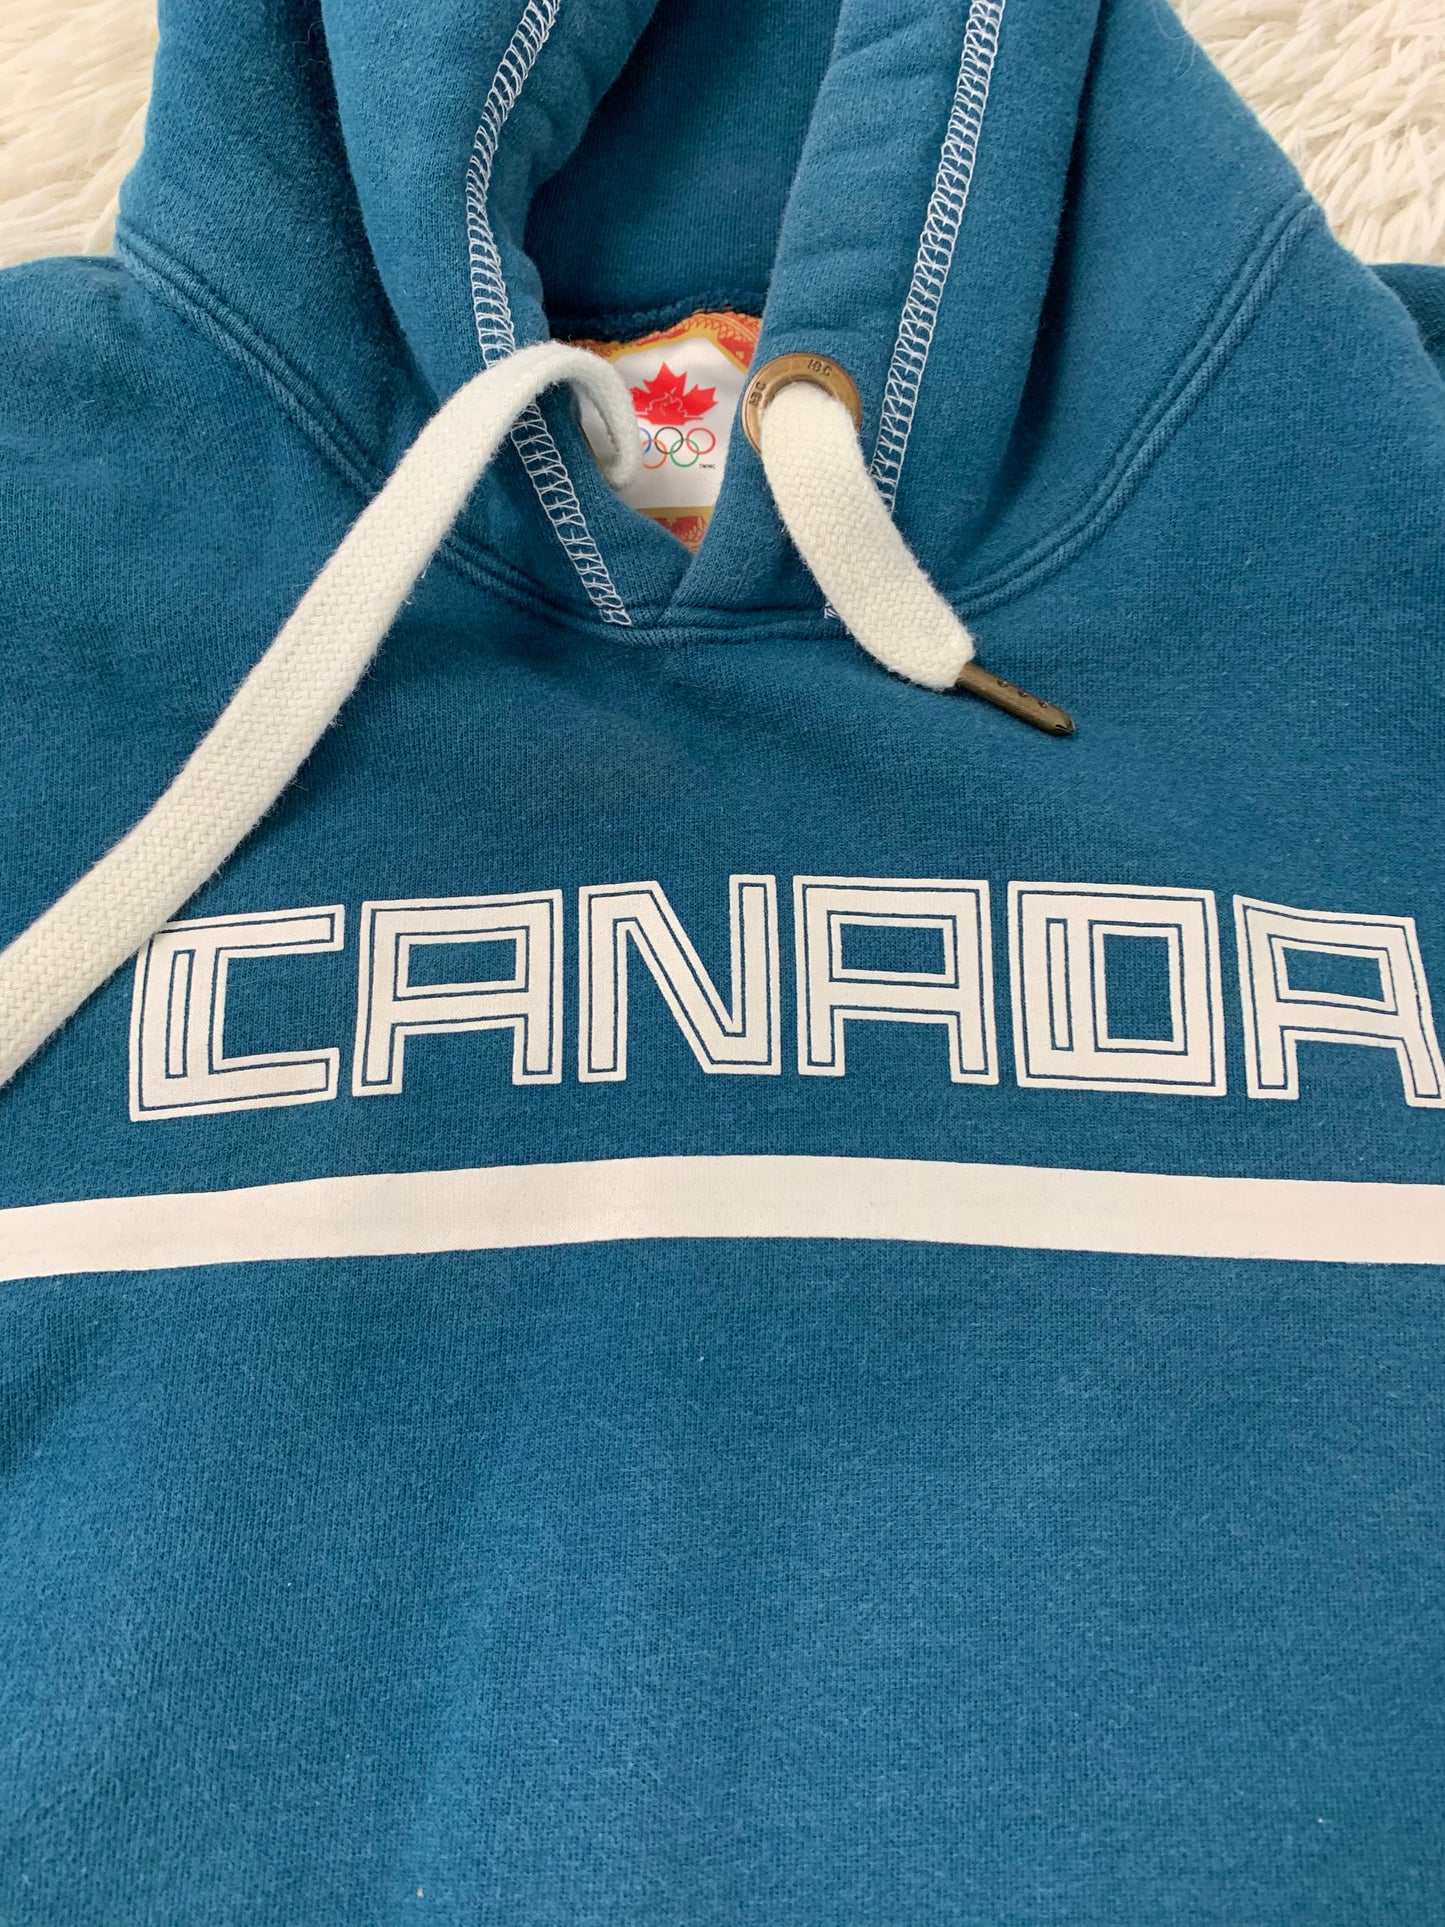 Canada Olympics Hoodie - Large